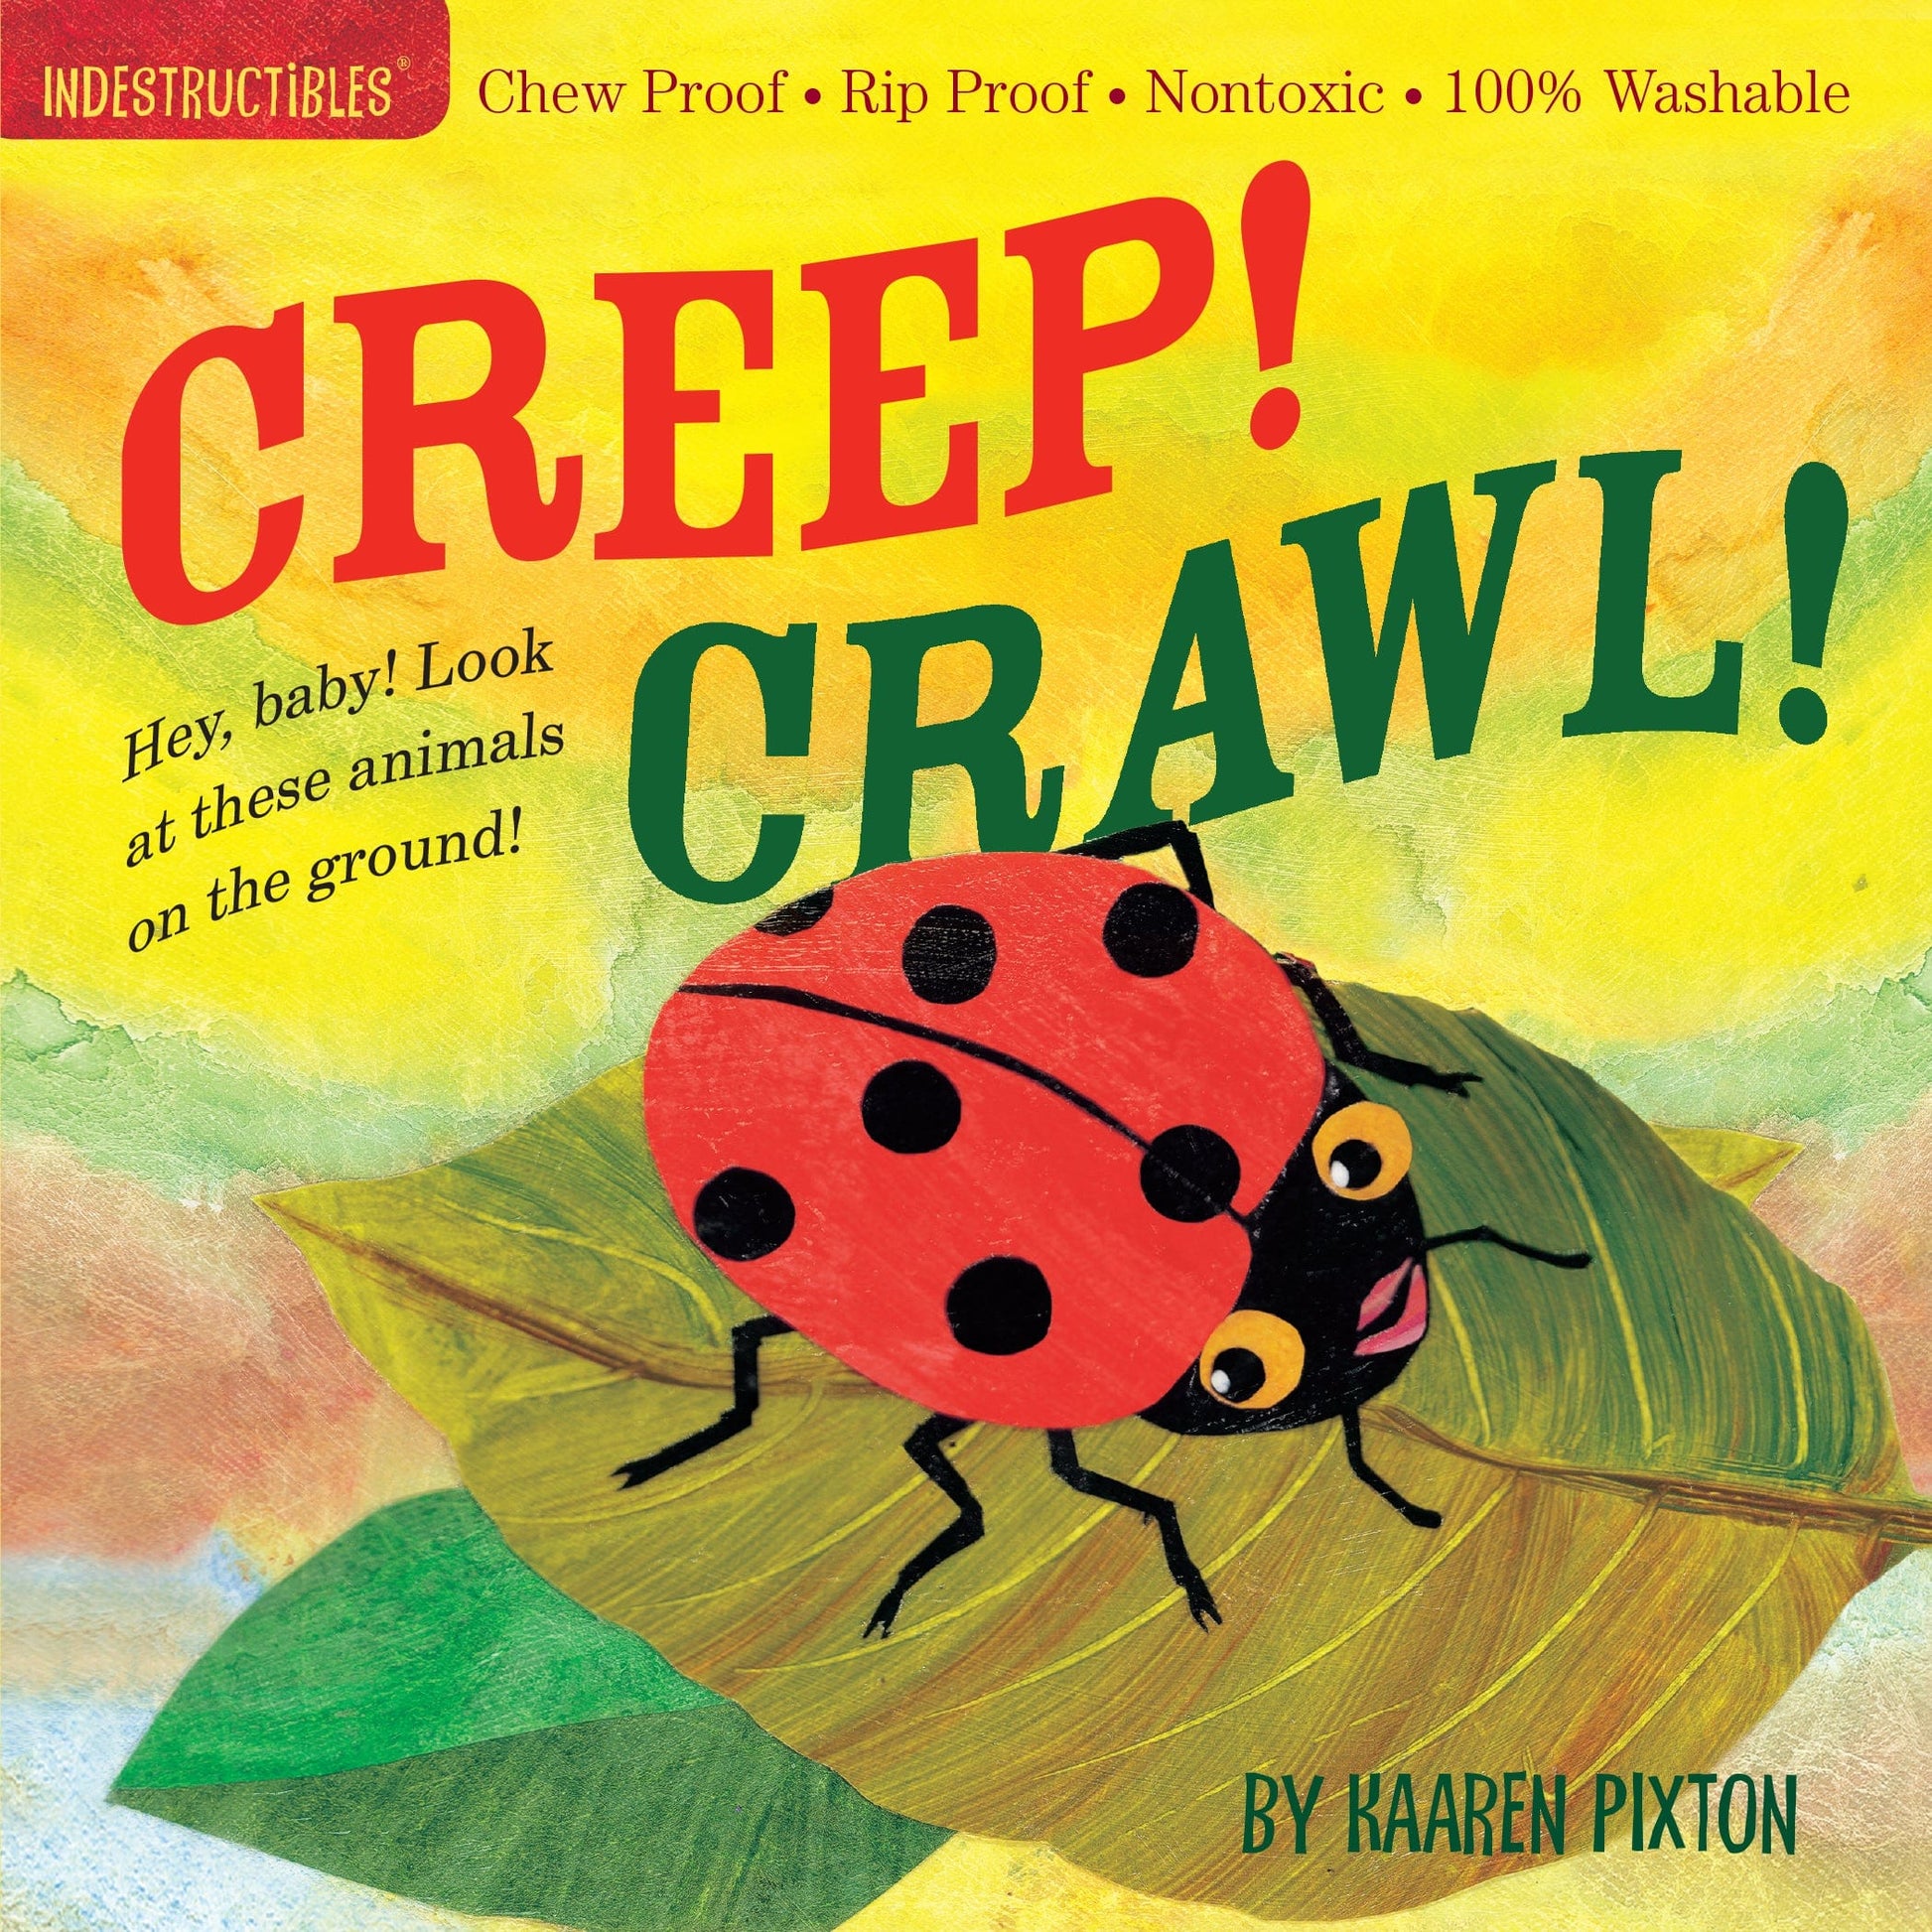 Cherry Tree Lane Toys Creep! Crawl! Indestructibles! Waterproof Books